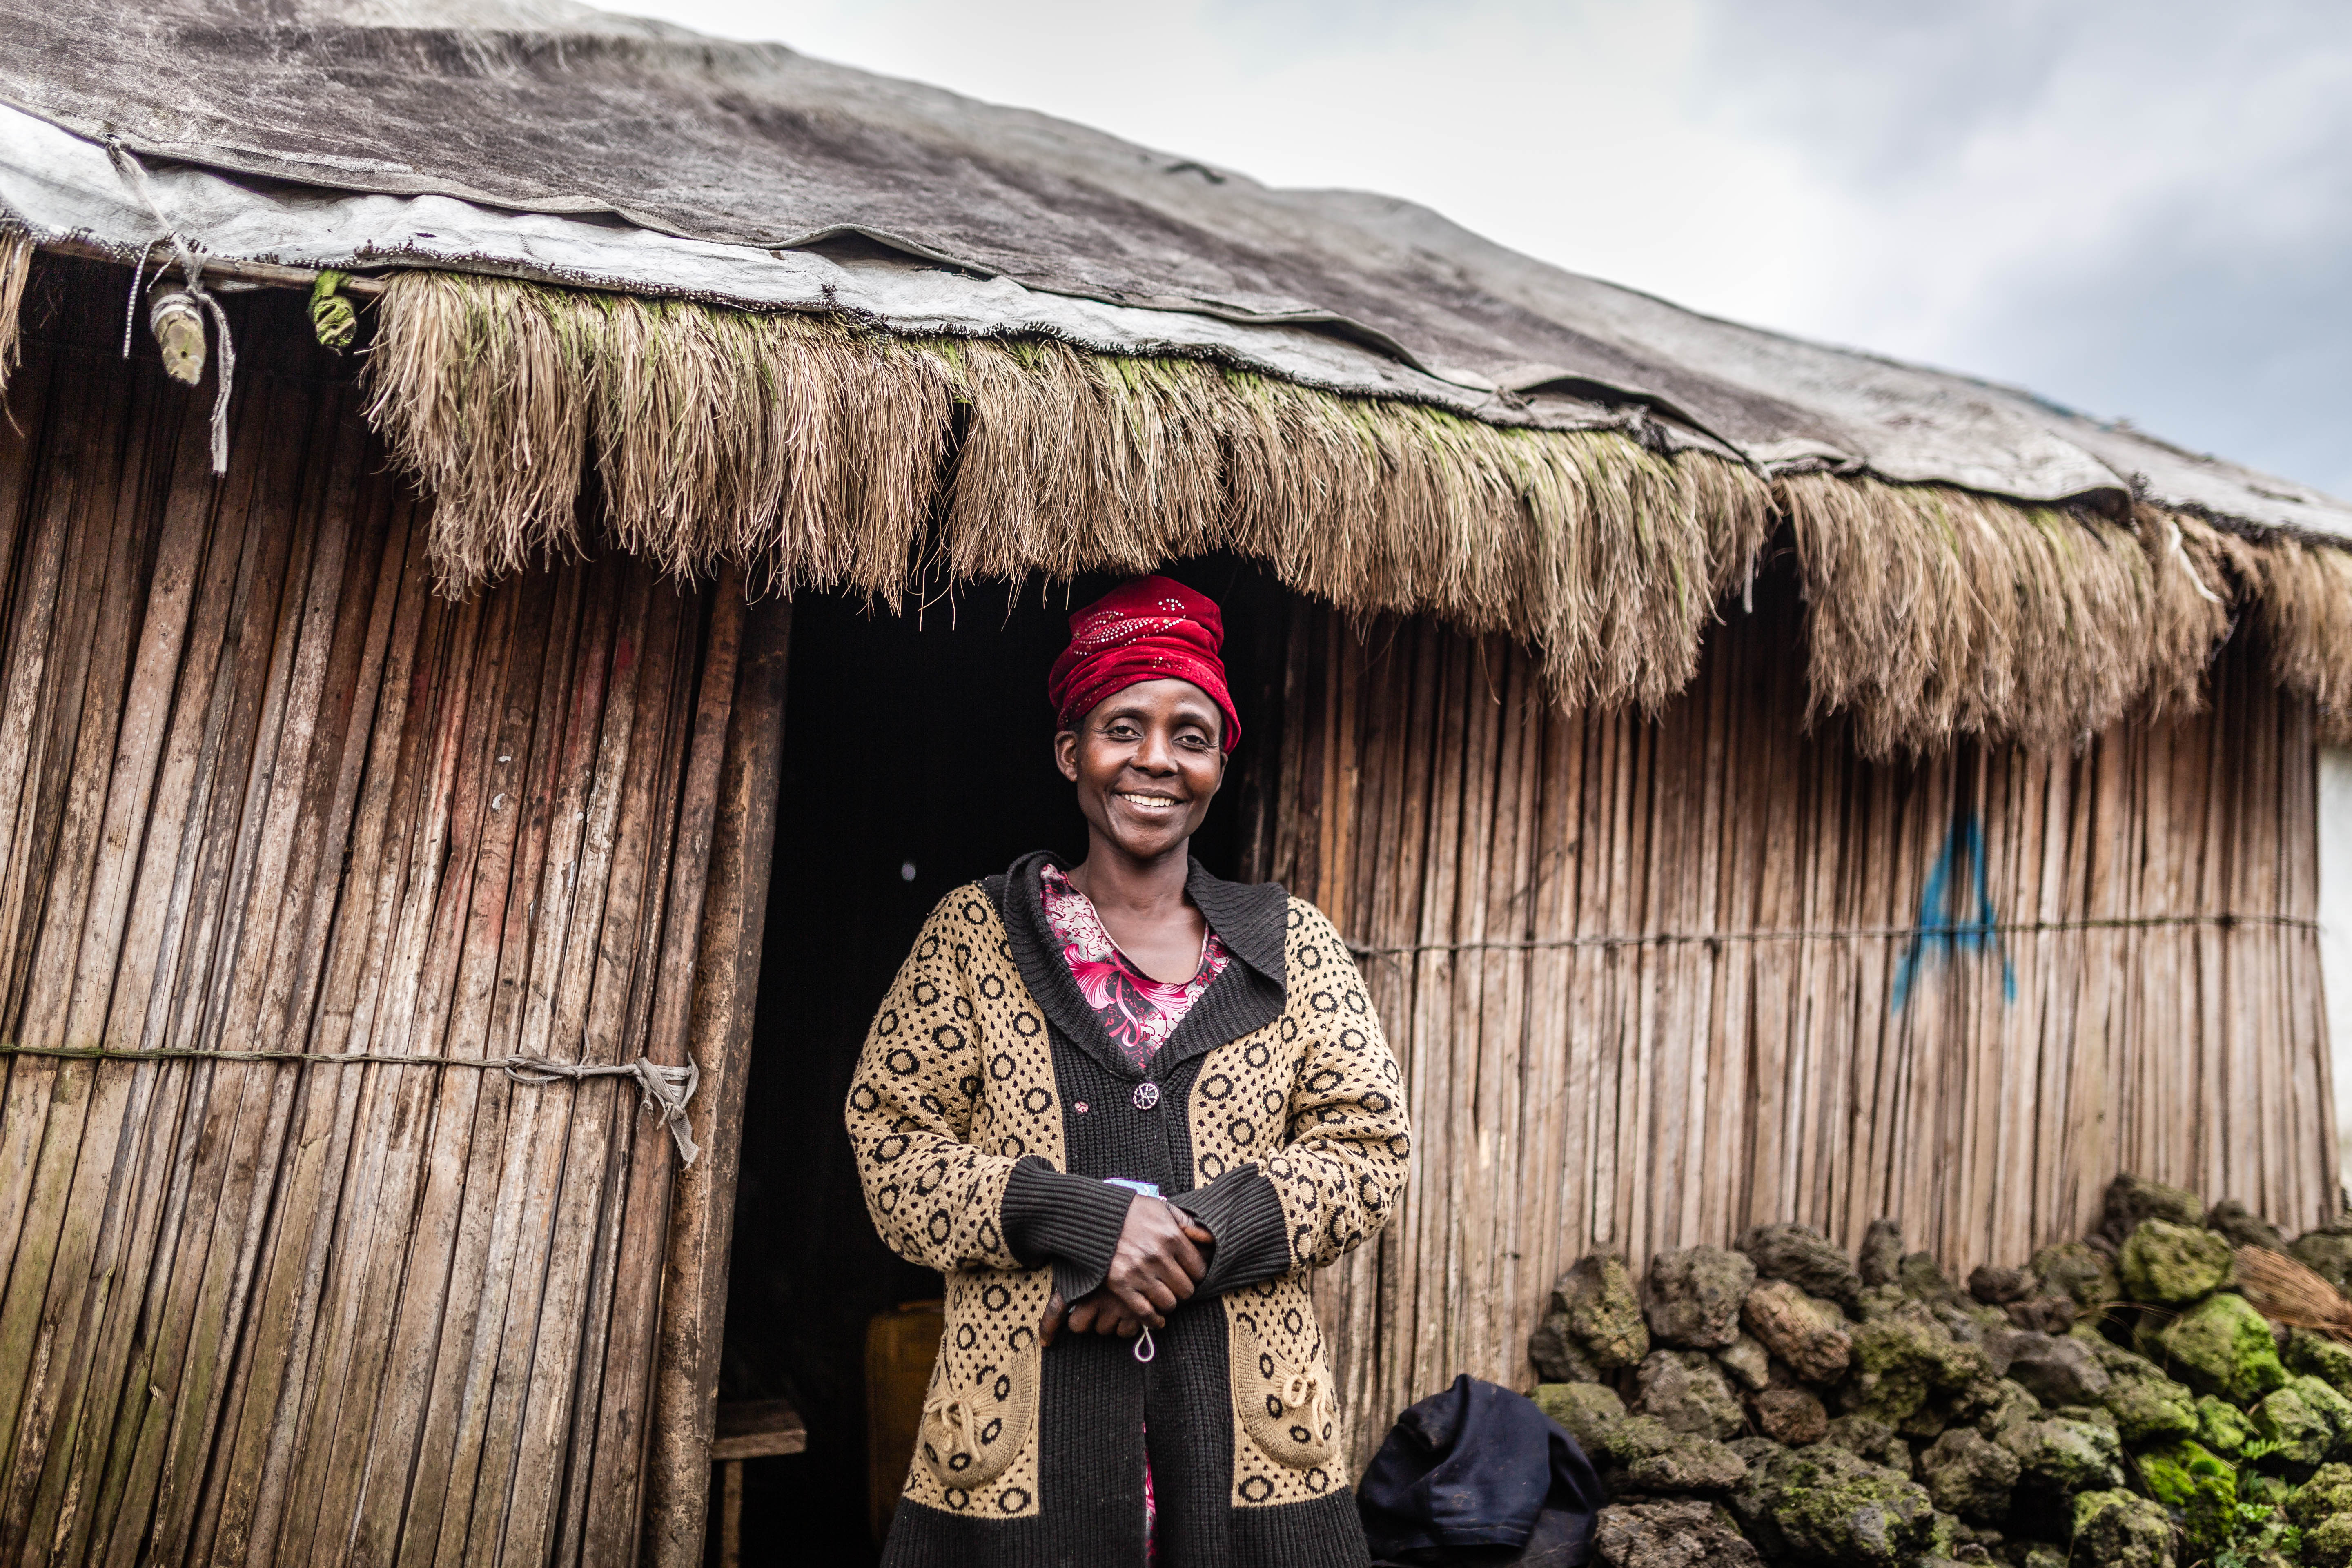 Asifiwe stood outside her home in DRC